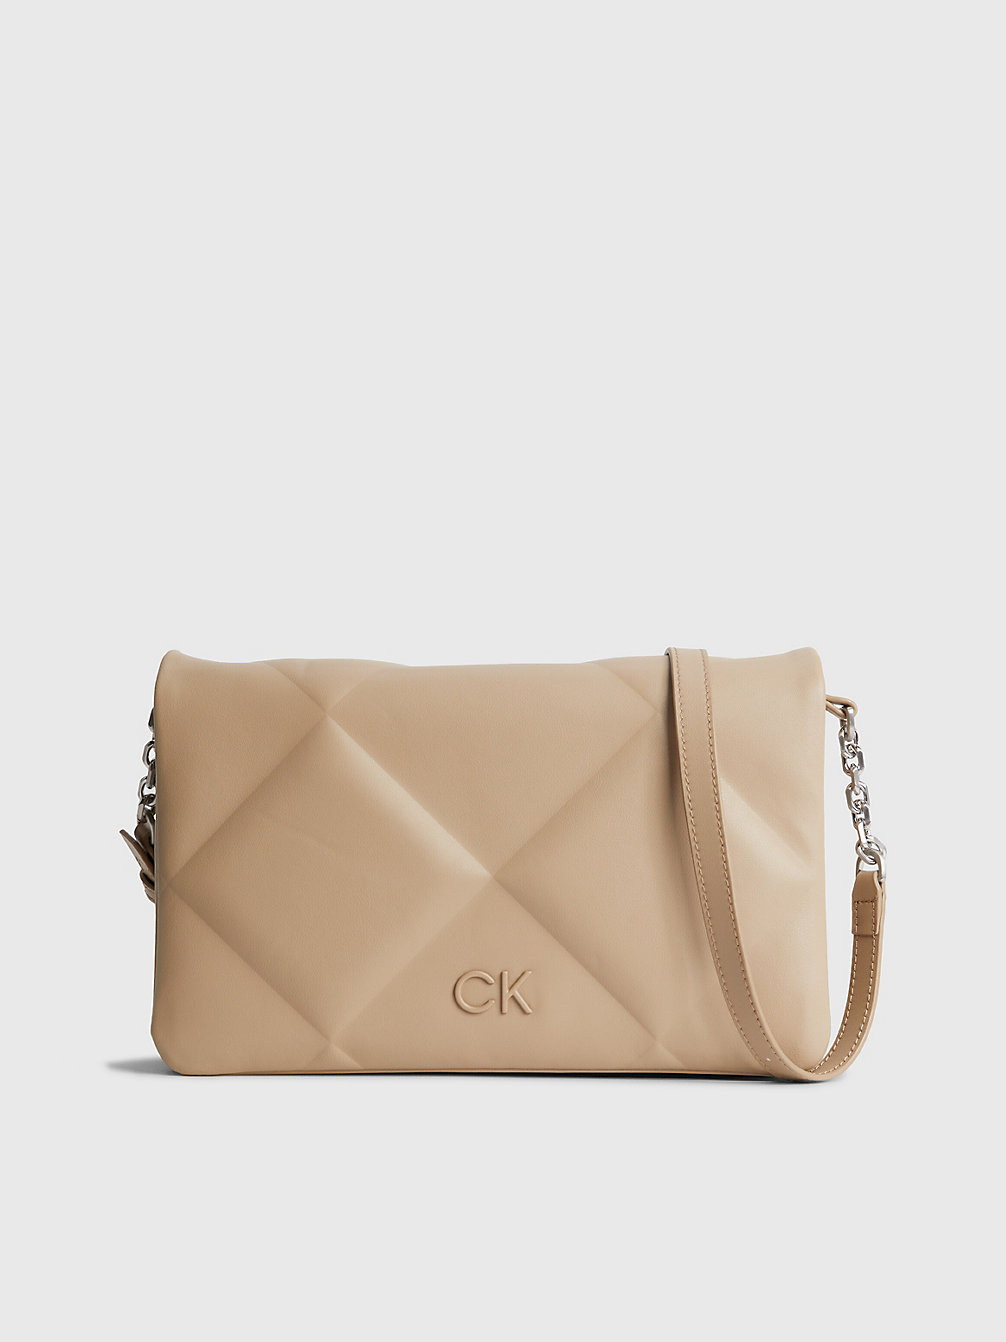 SILVER MINK Quilted Clutch Shoulder Bag undefined women Calvin Klein